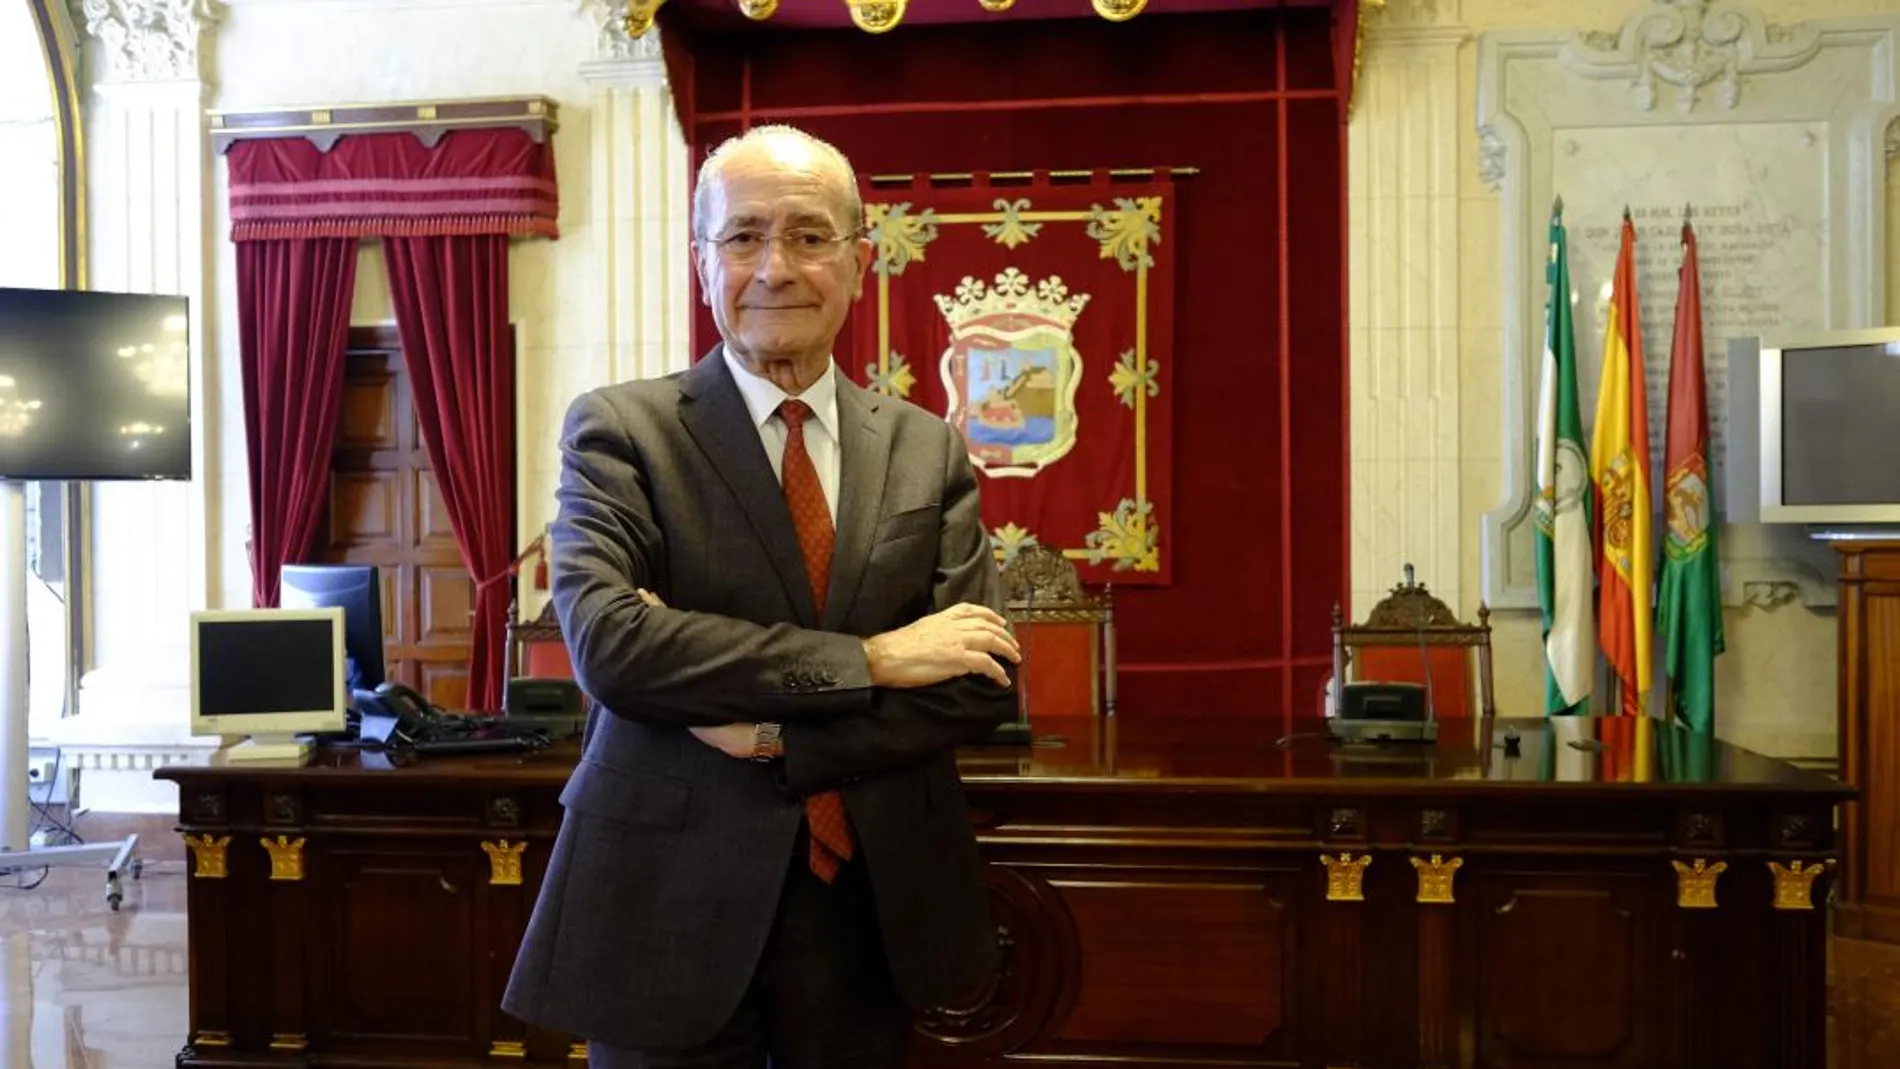 El alcalde de Málaga, Francisco de la Torre